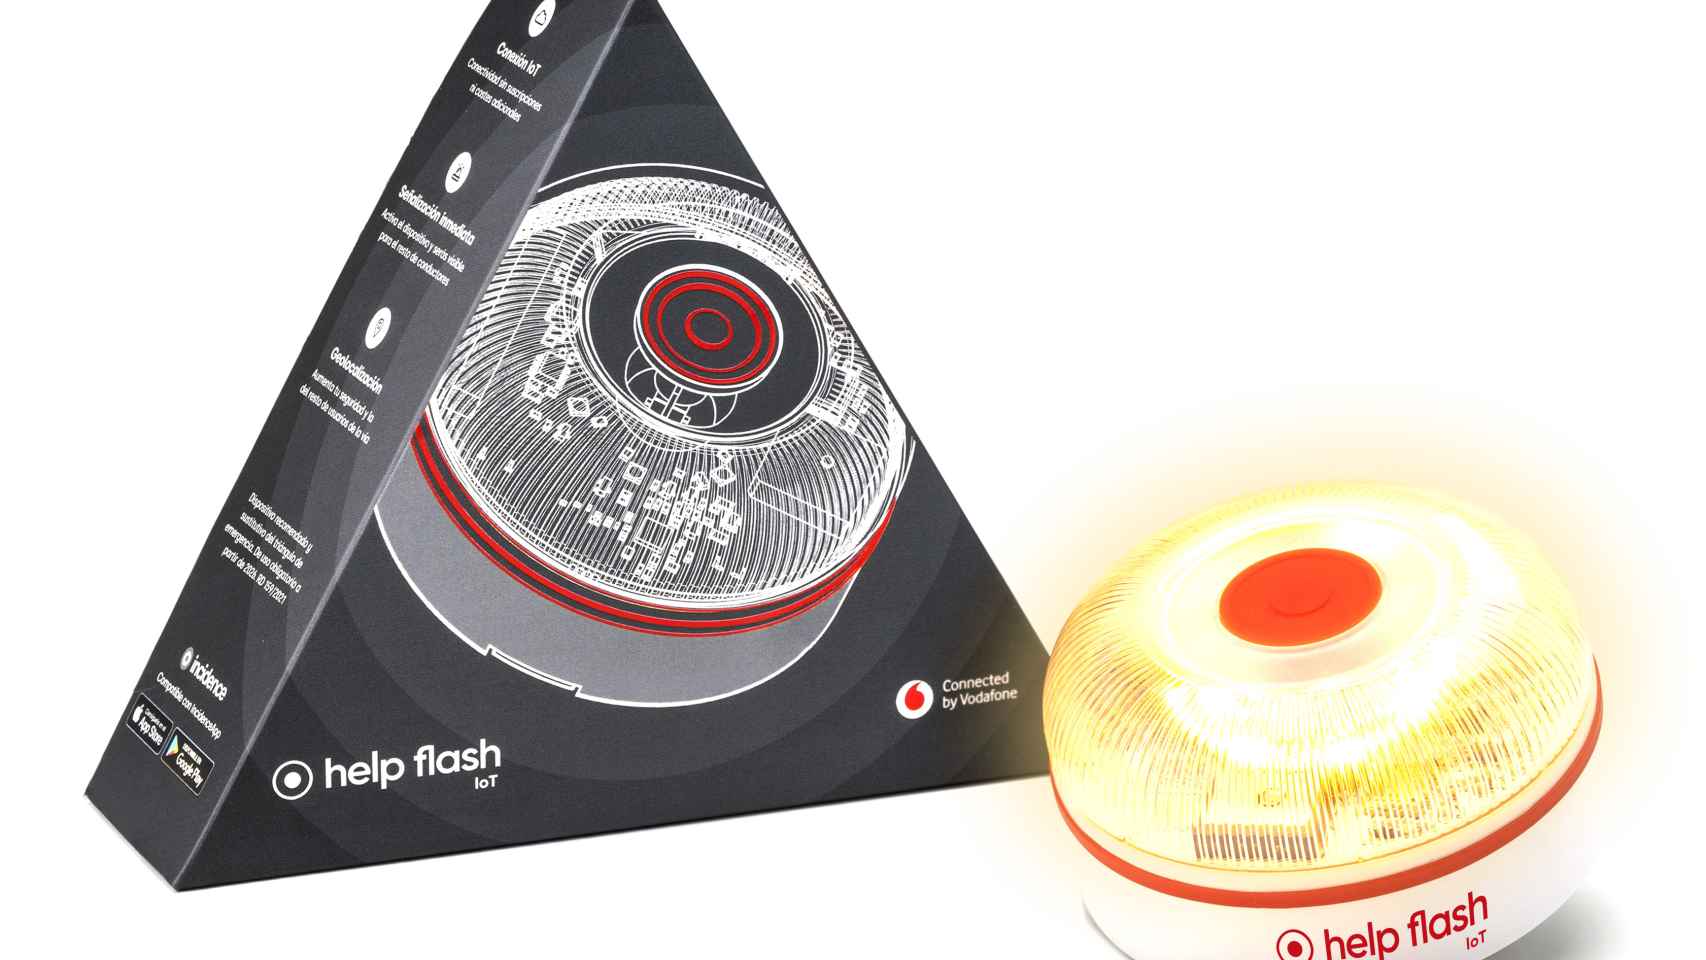 Help Flash - Luz de Emergencia - Señal V16 para Coche Homologada